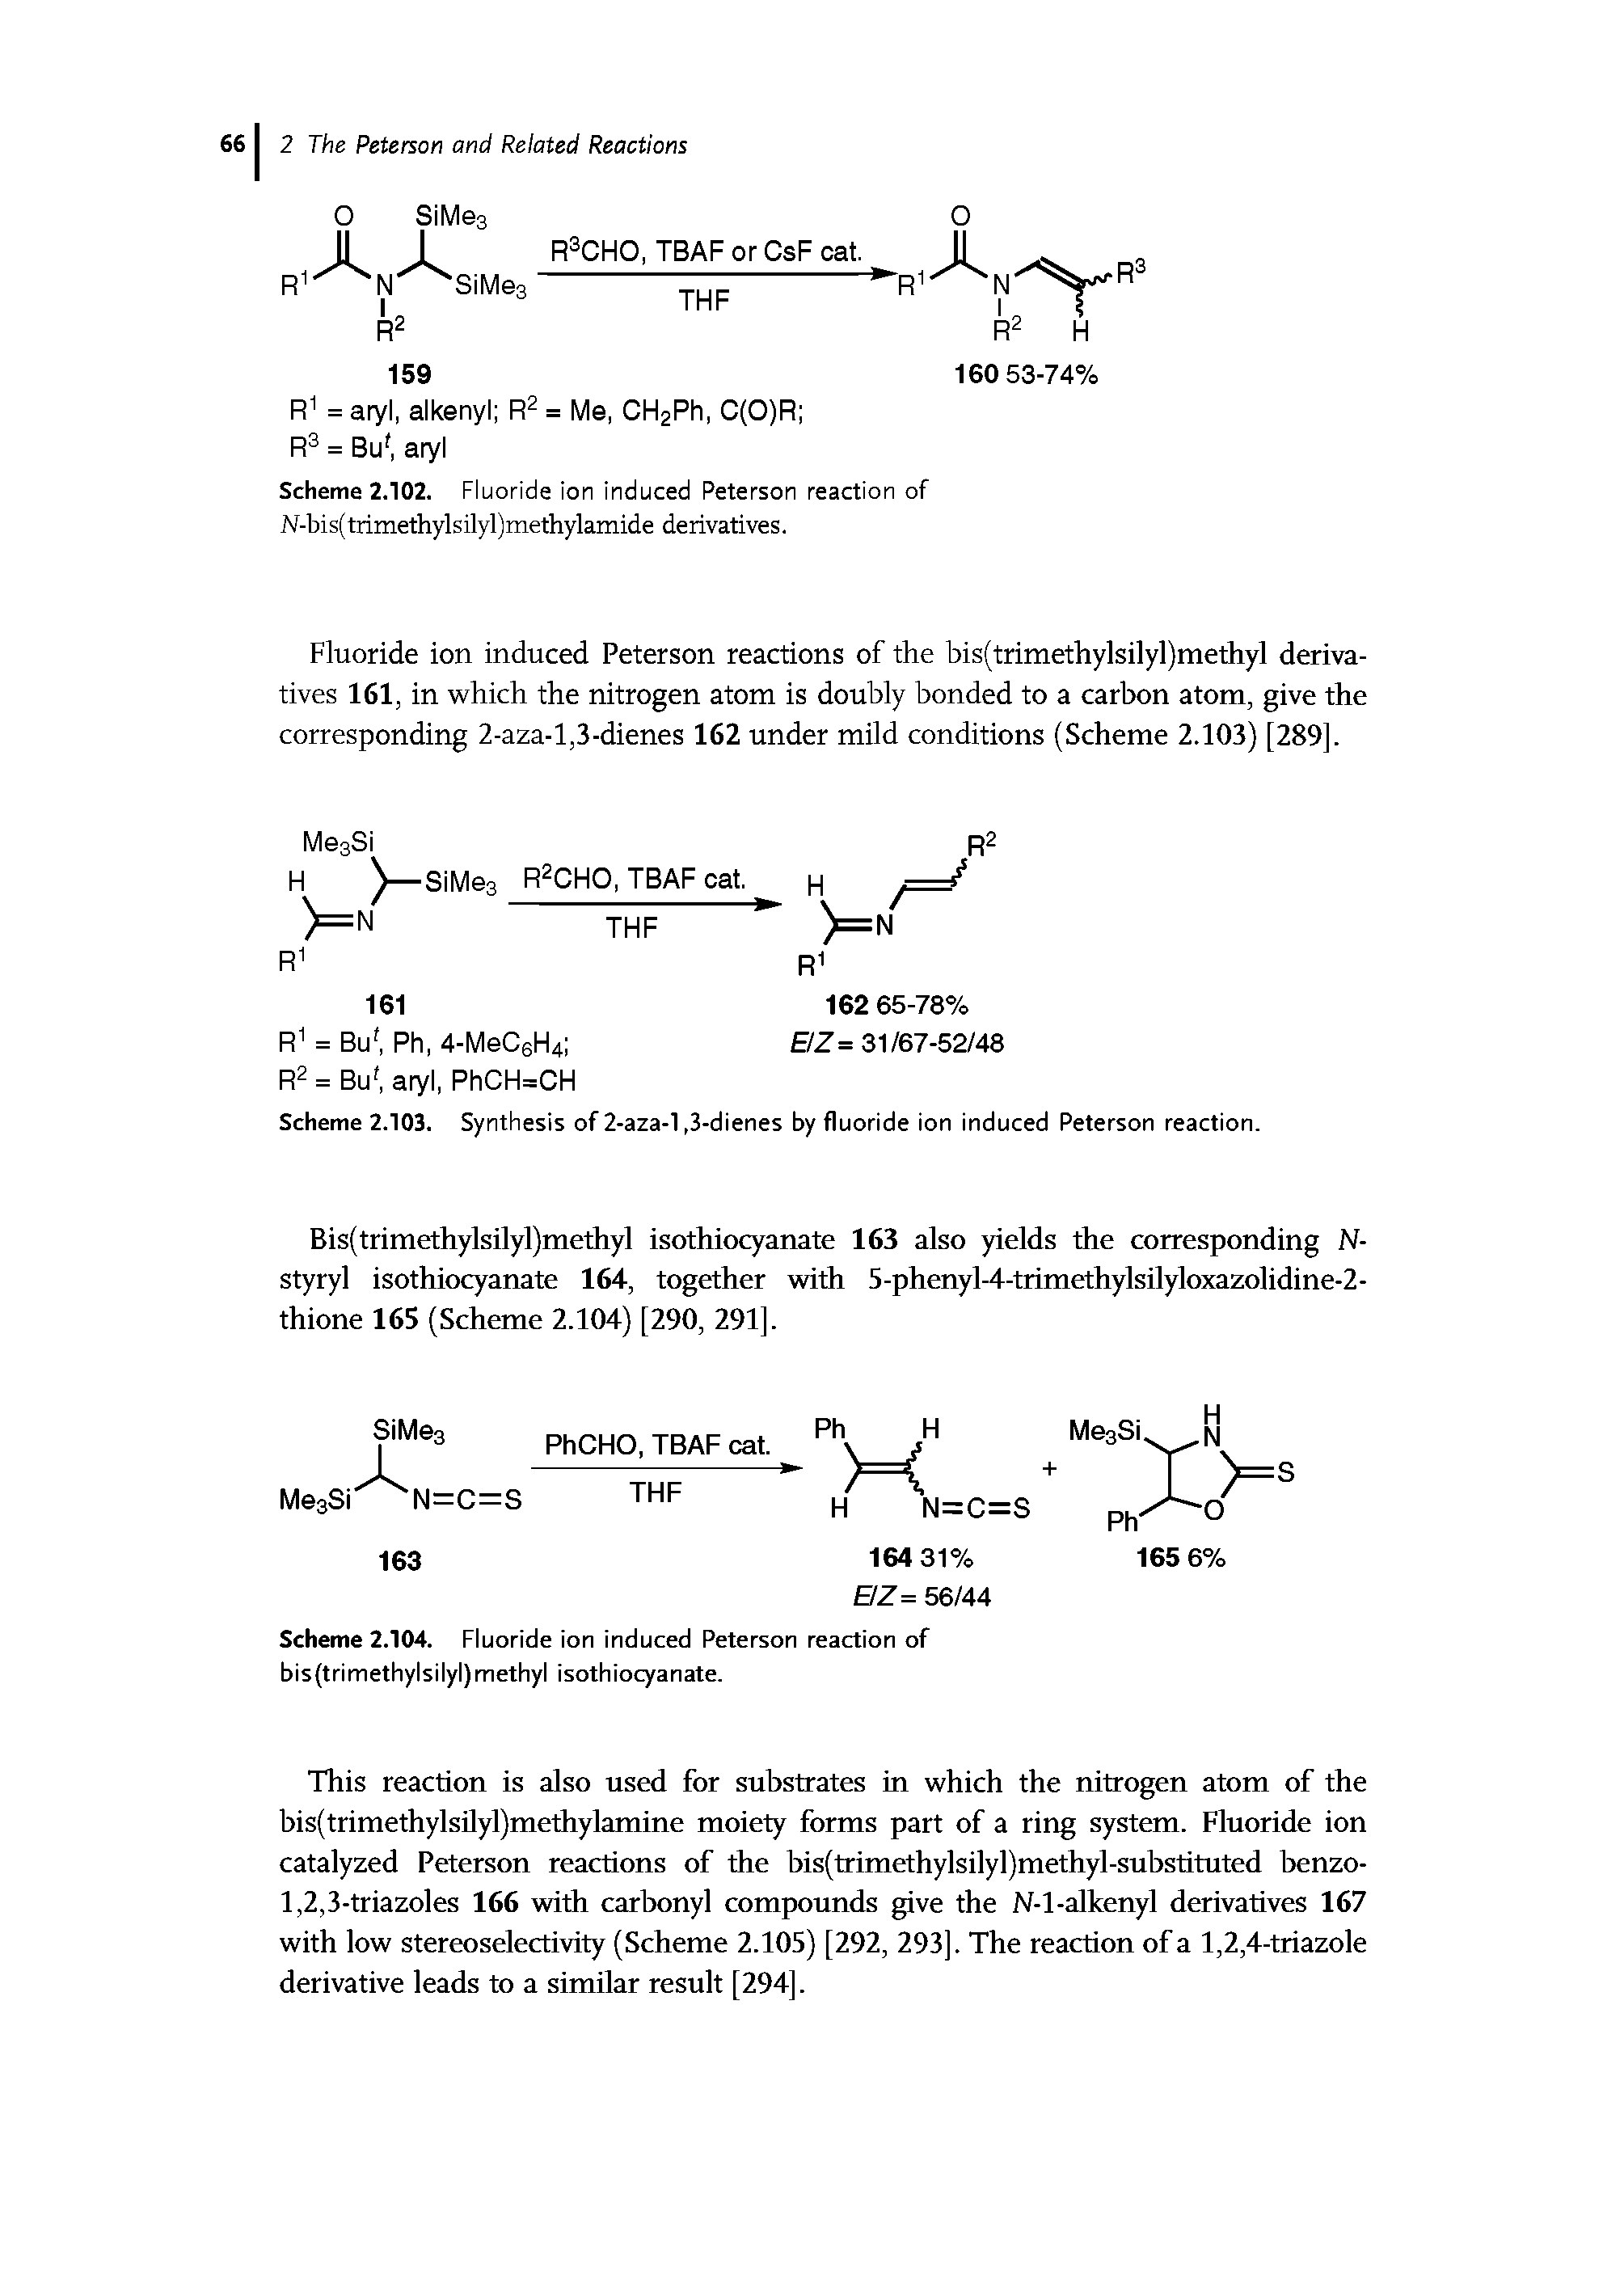 Scheme 2.104. Fluoride ion induced Peterson reaction of bis(trimethylsilyl) methyl isothiocyanate.